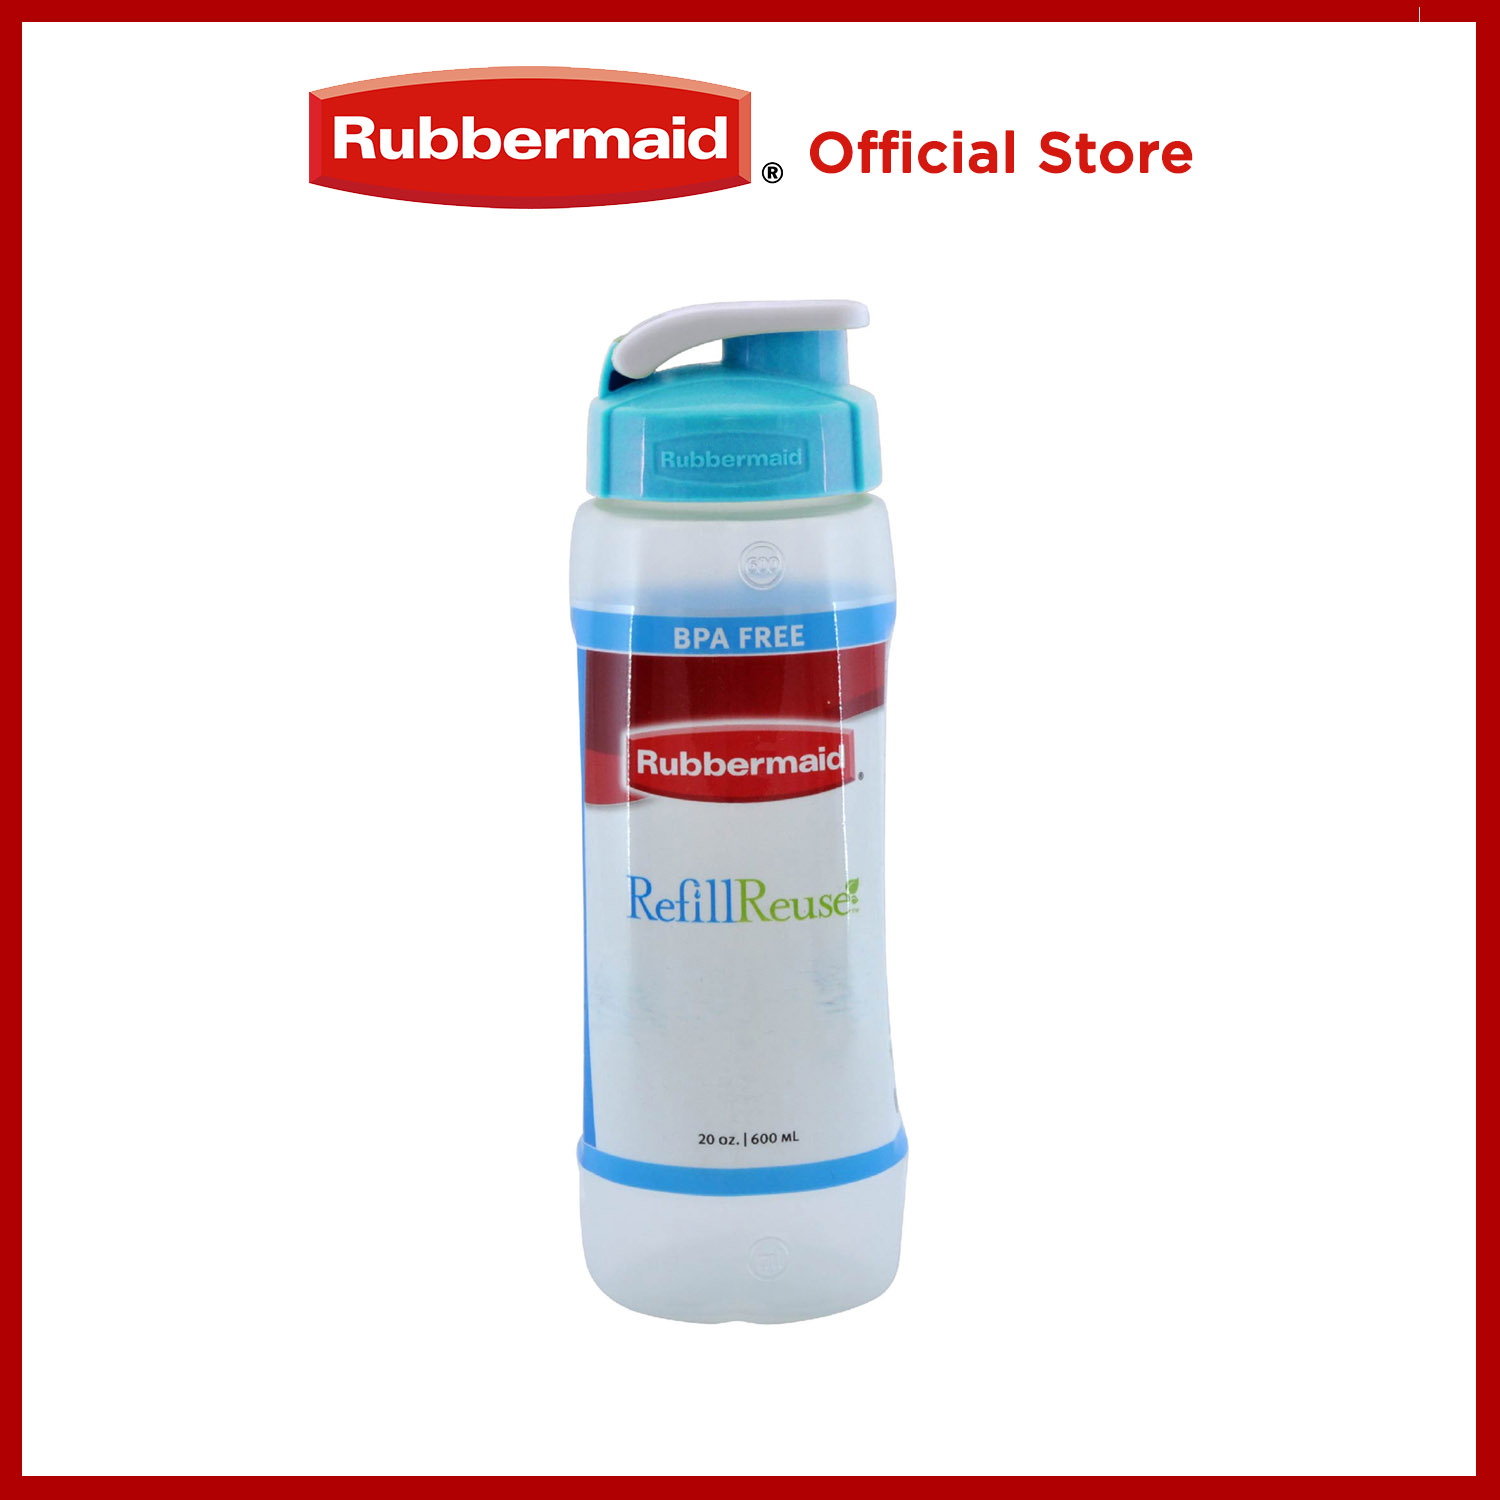 Rubbermaid - Rubbermaid, Refill Reuse - Bottle, 32 oz, Shop